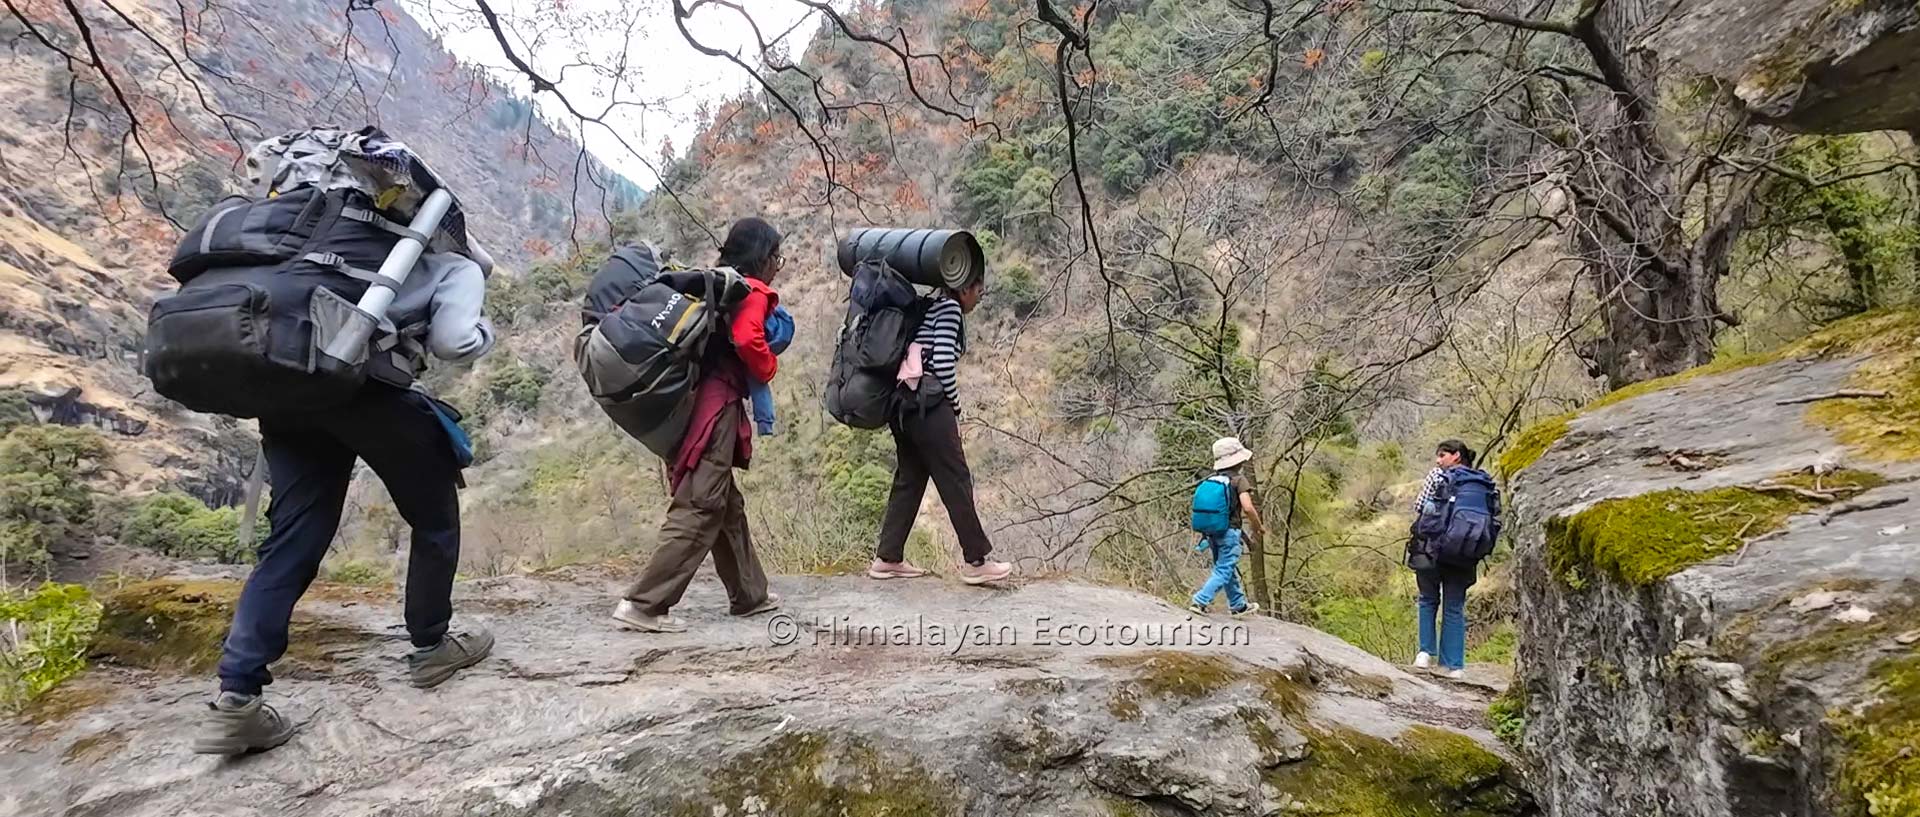 Women Special Trek in the Great Himalayan National Park with Himalayan Ecotourism